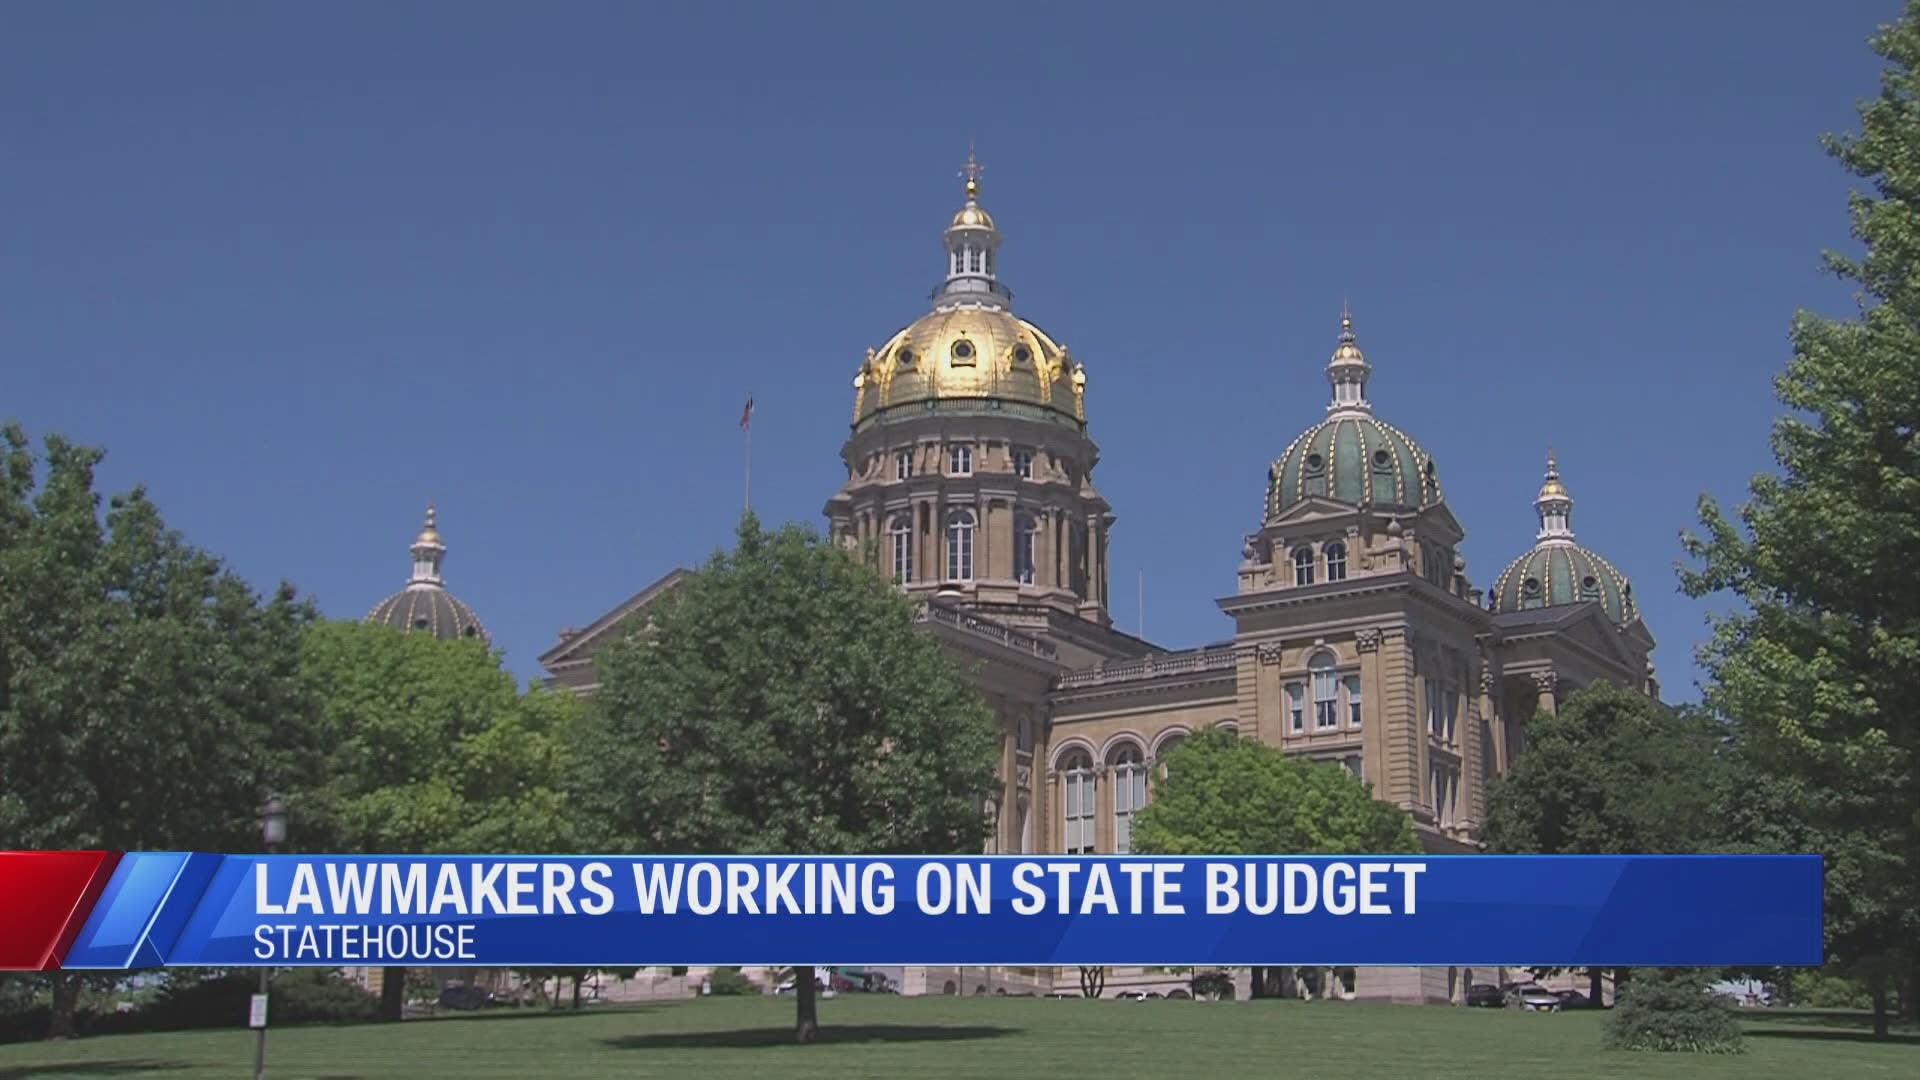 Senate Majority Leader Jack Whitver, R-Ankeny, said Iowa's budget surplus has helped keep Iowa from having to slash funding to programs.